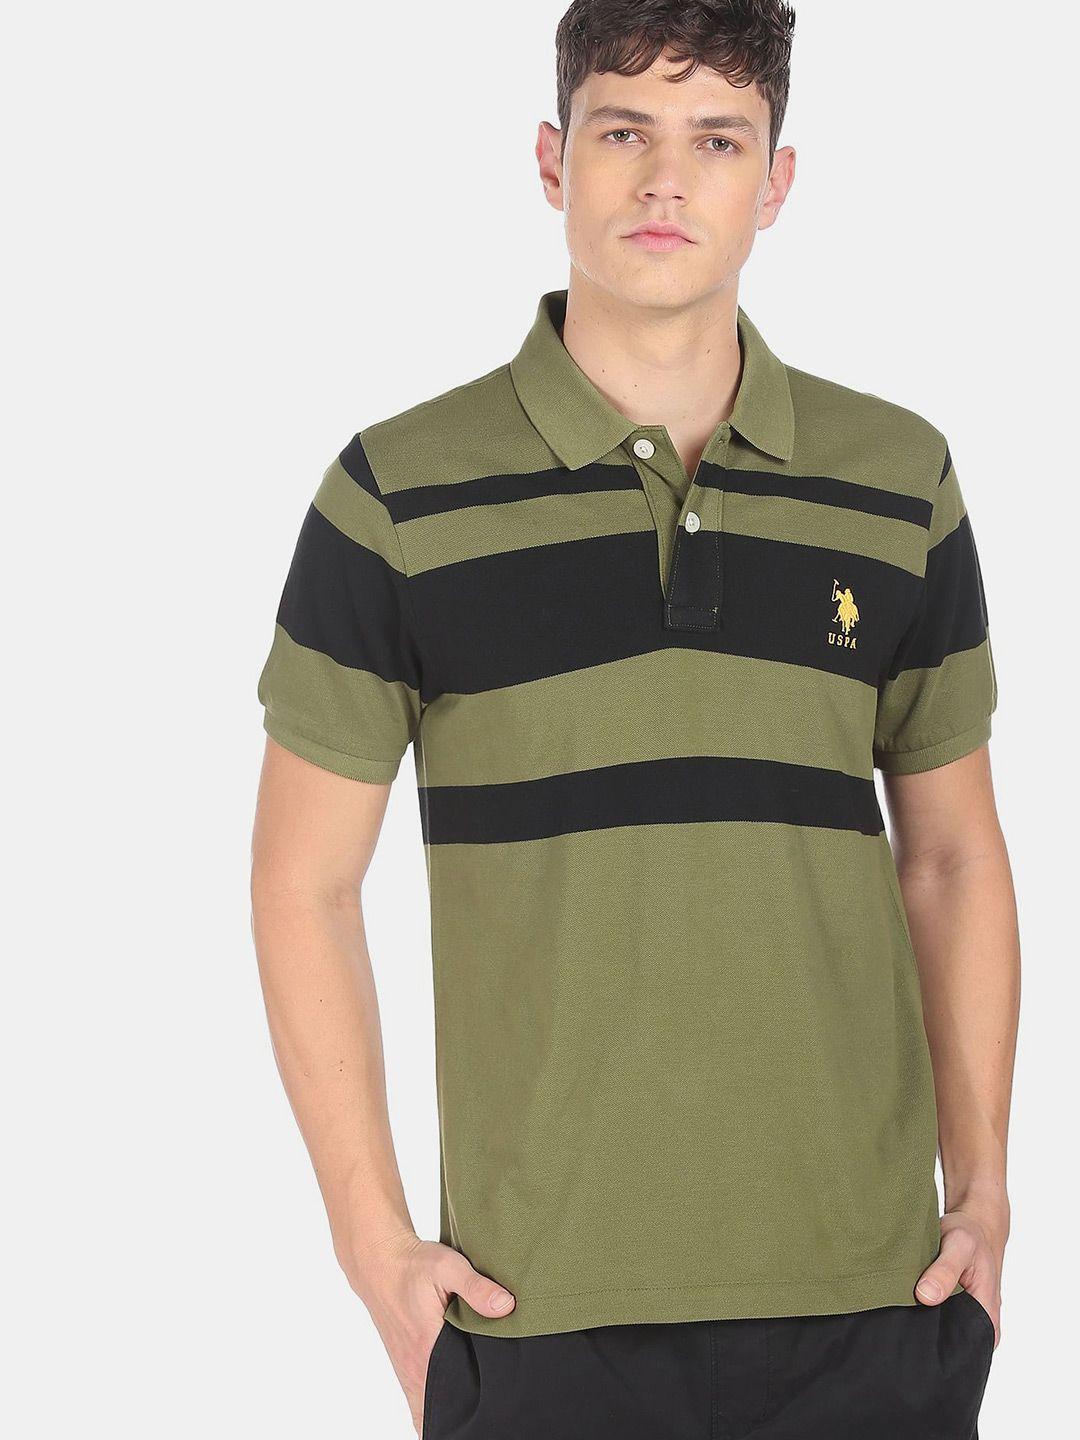 u.s. polo assn. men olive green & black striped polo collar t-shirt